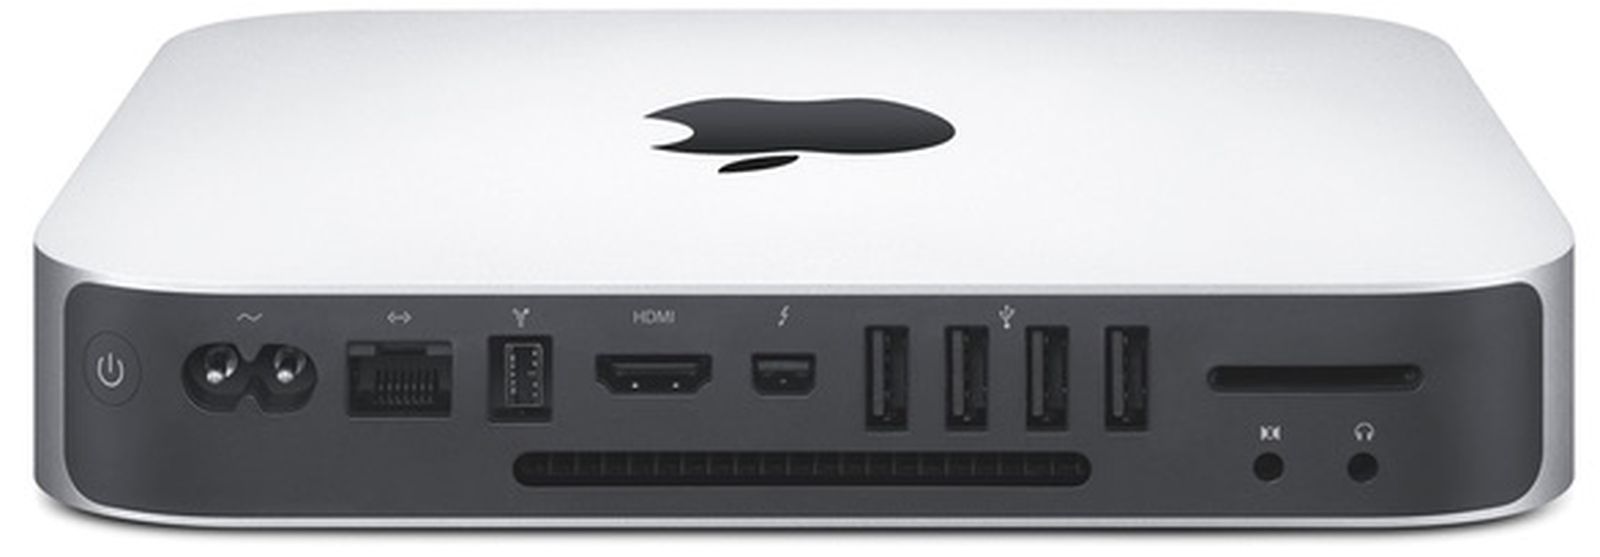 Apple Classifies 2011 Mac Mini as Obsolete - MacRumors